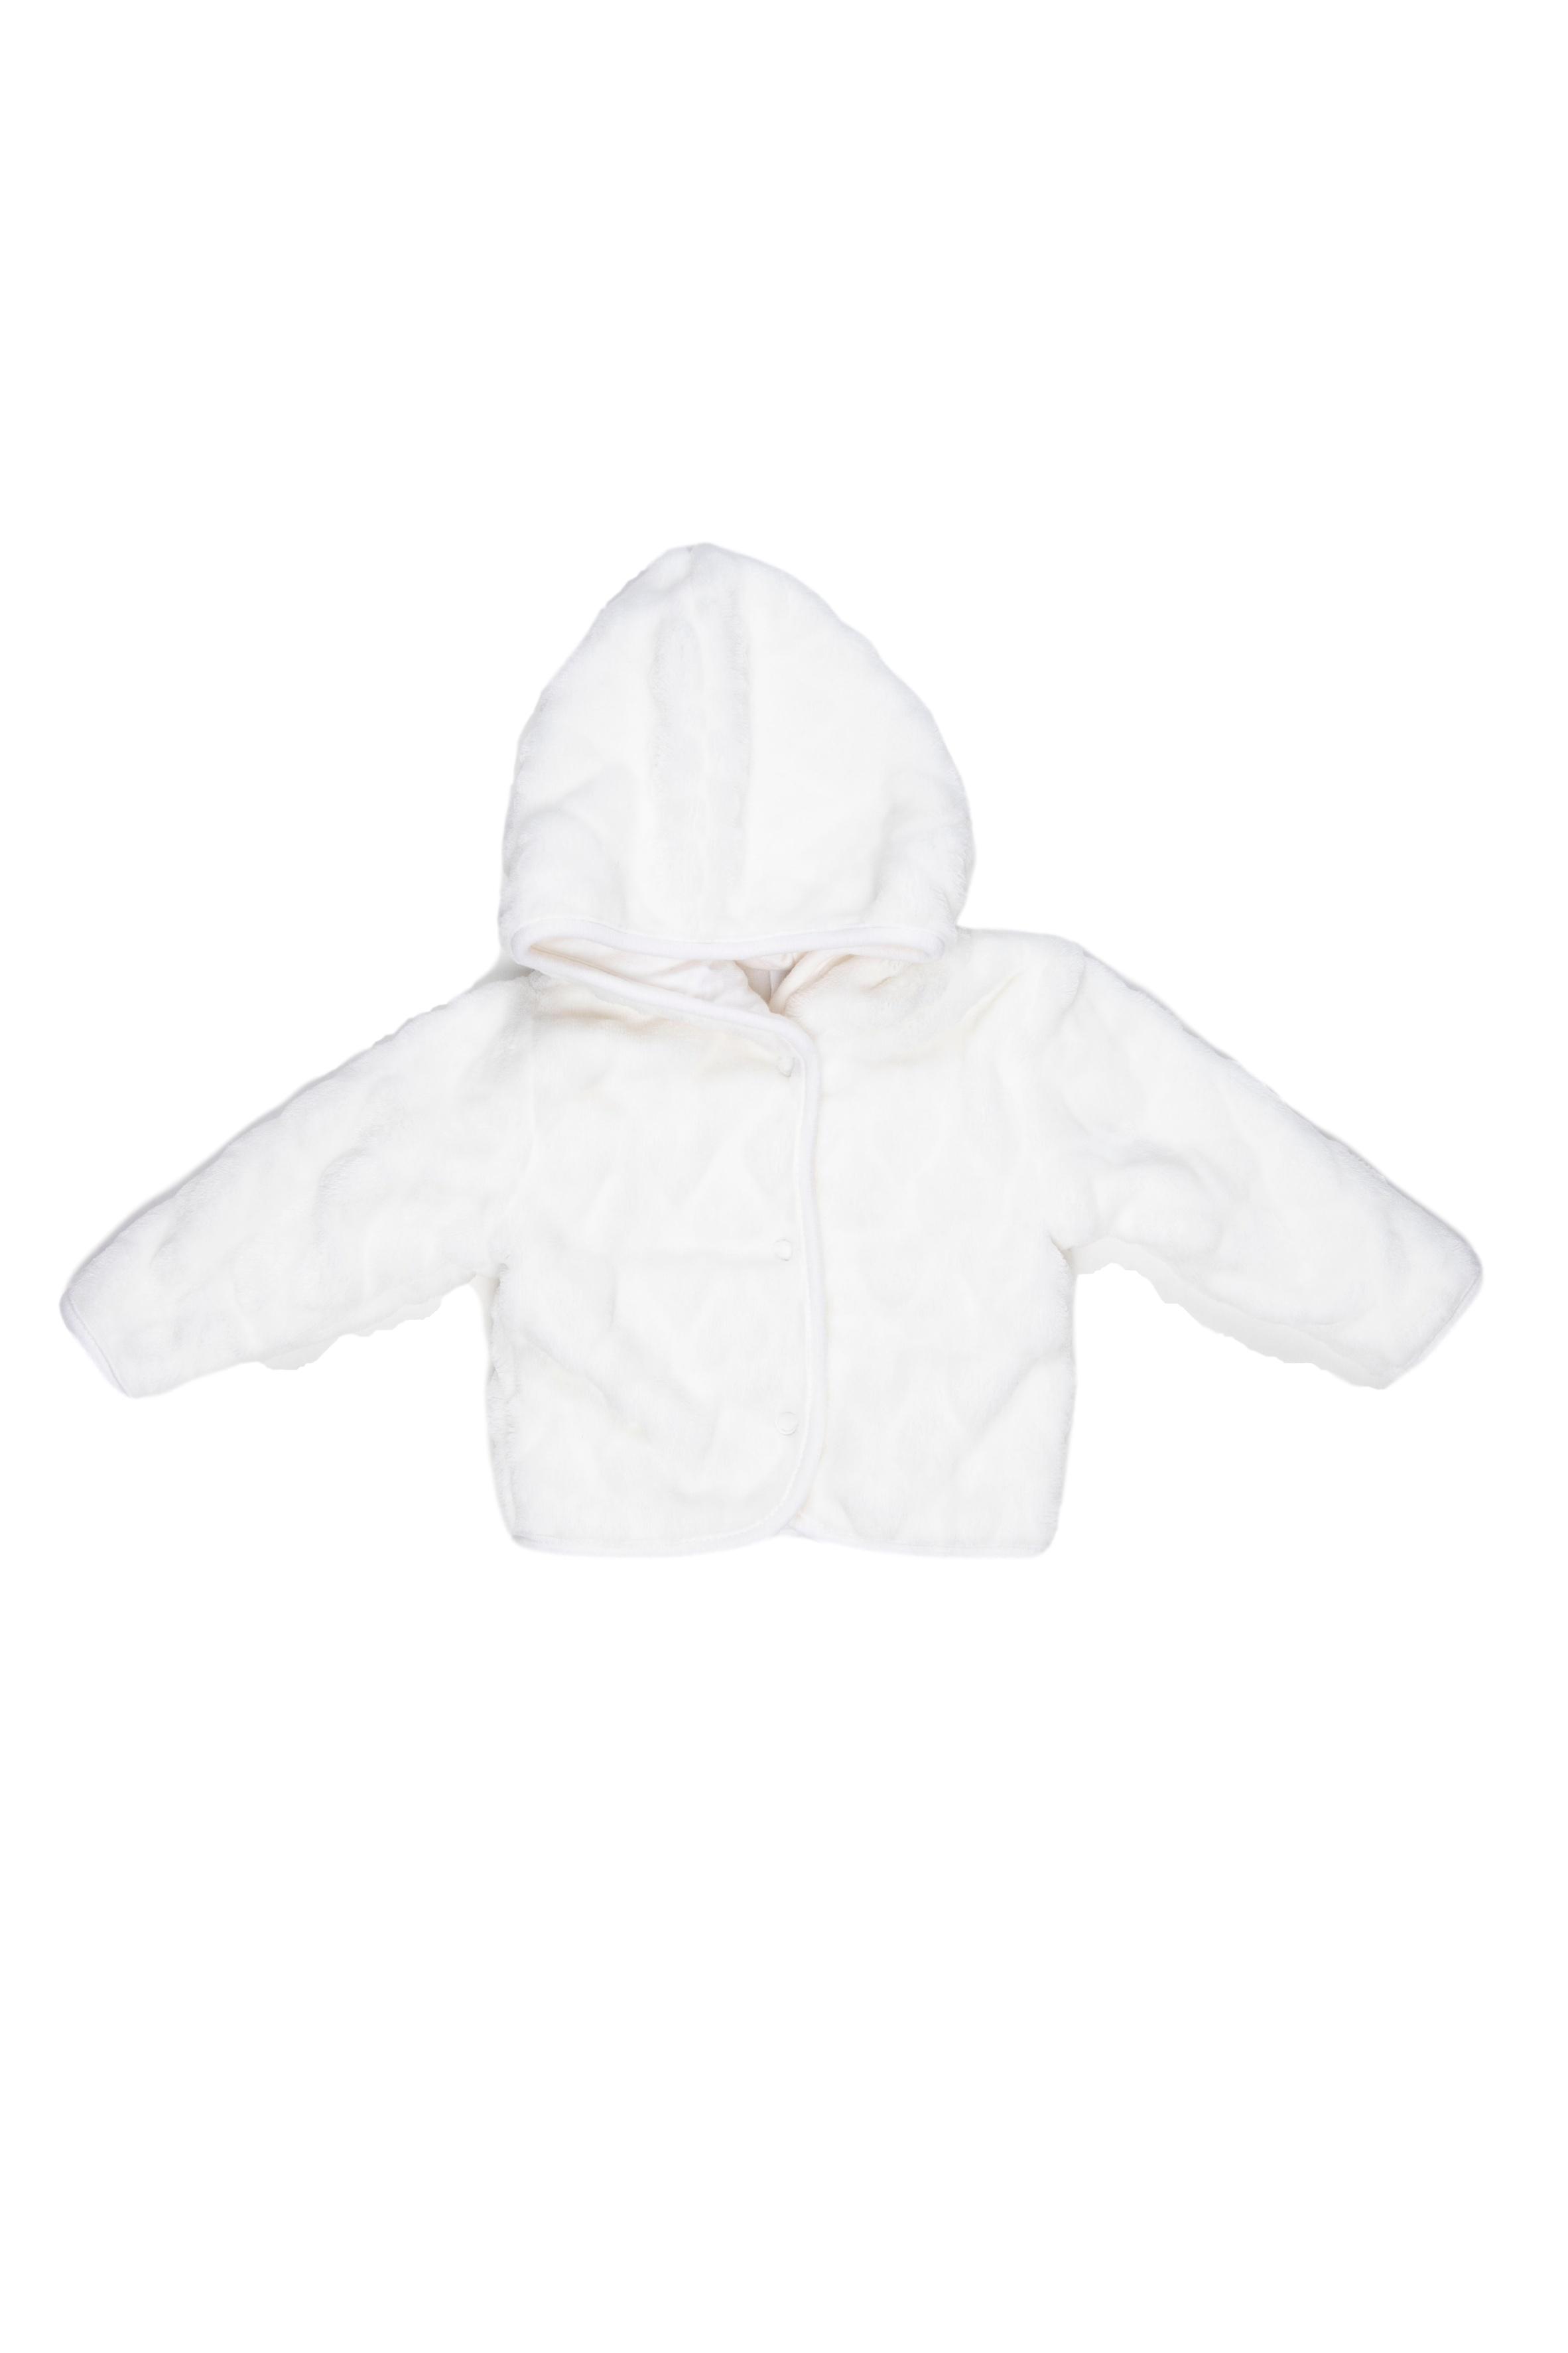 Chaqueta blanca de polar, forrado con algodón por dentro - Baby Club Chic